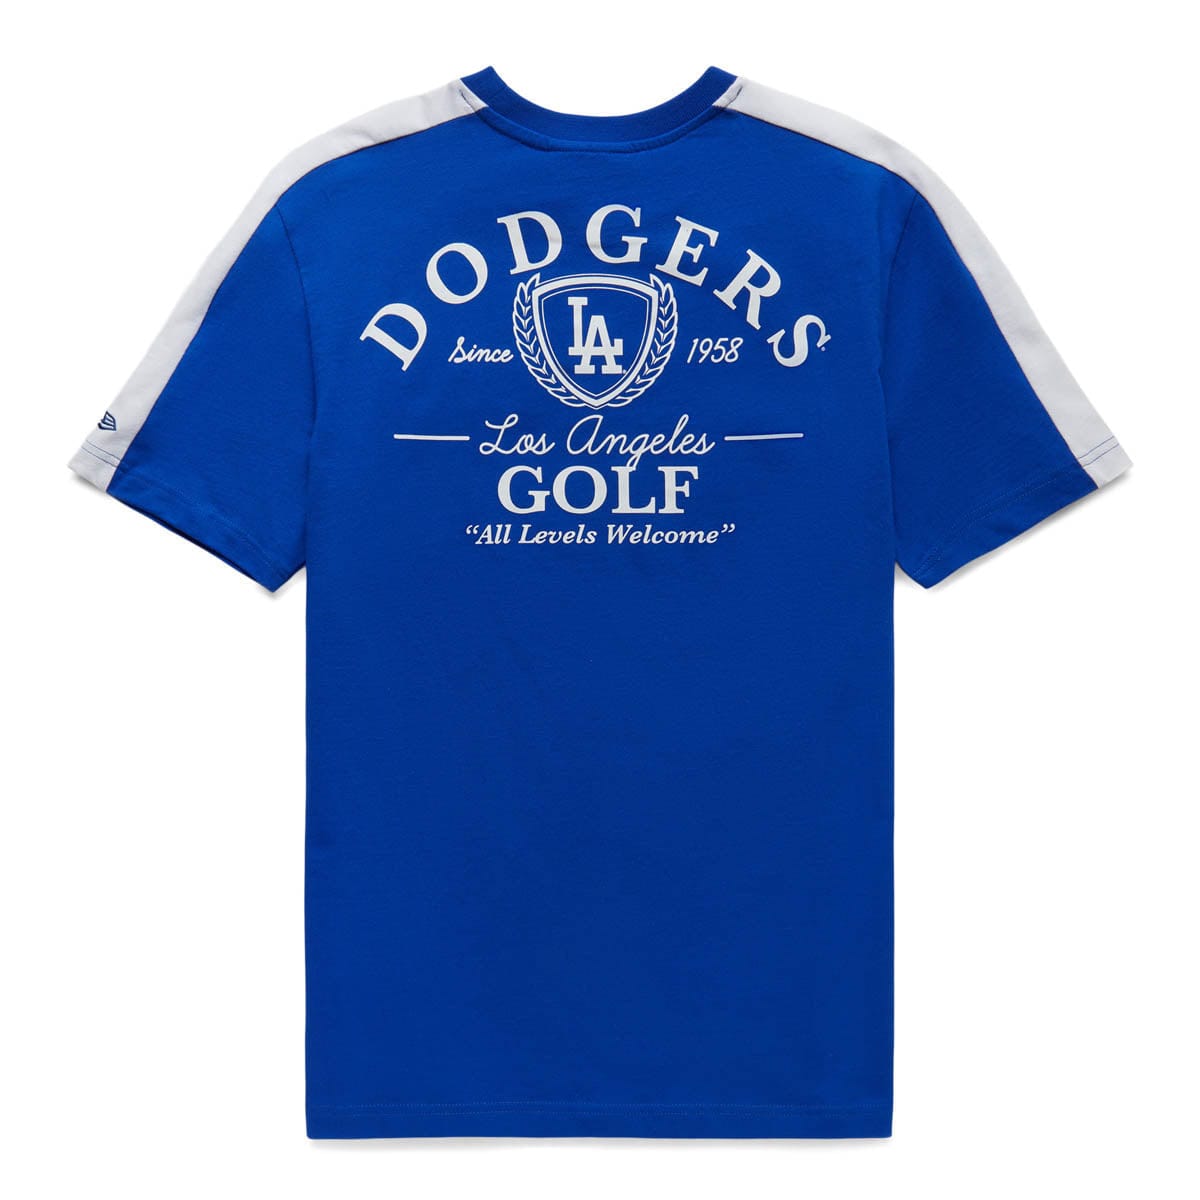 New Era T-Shirts FAIRWAY PACK DODGERS T-SHIRT